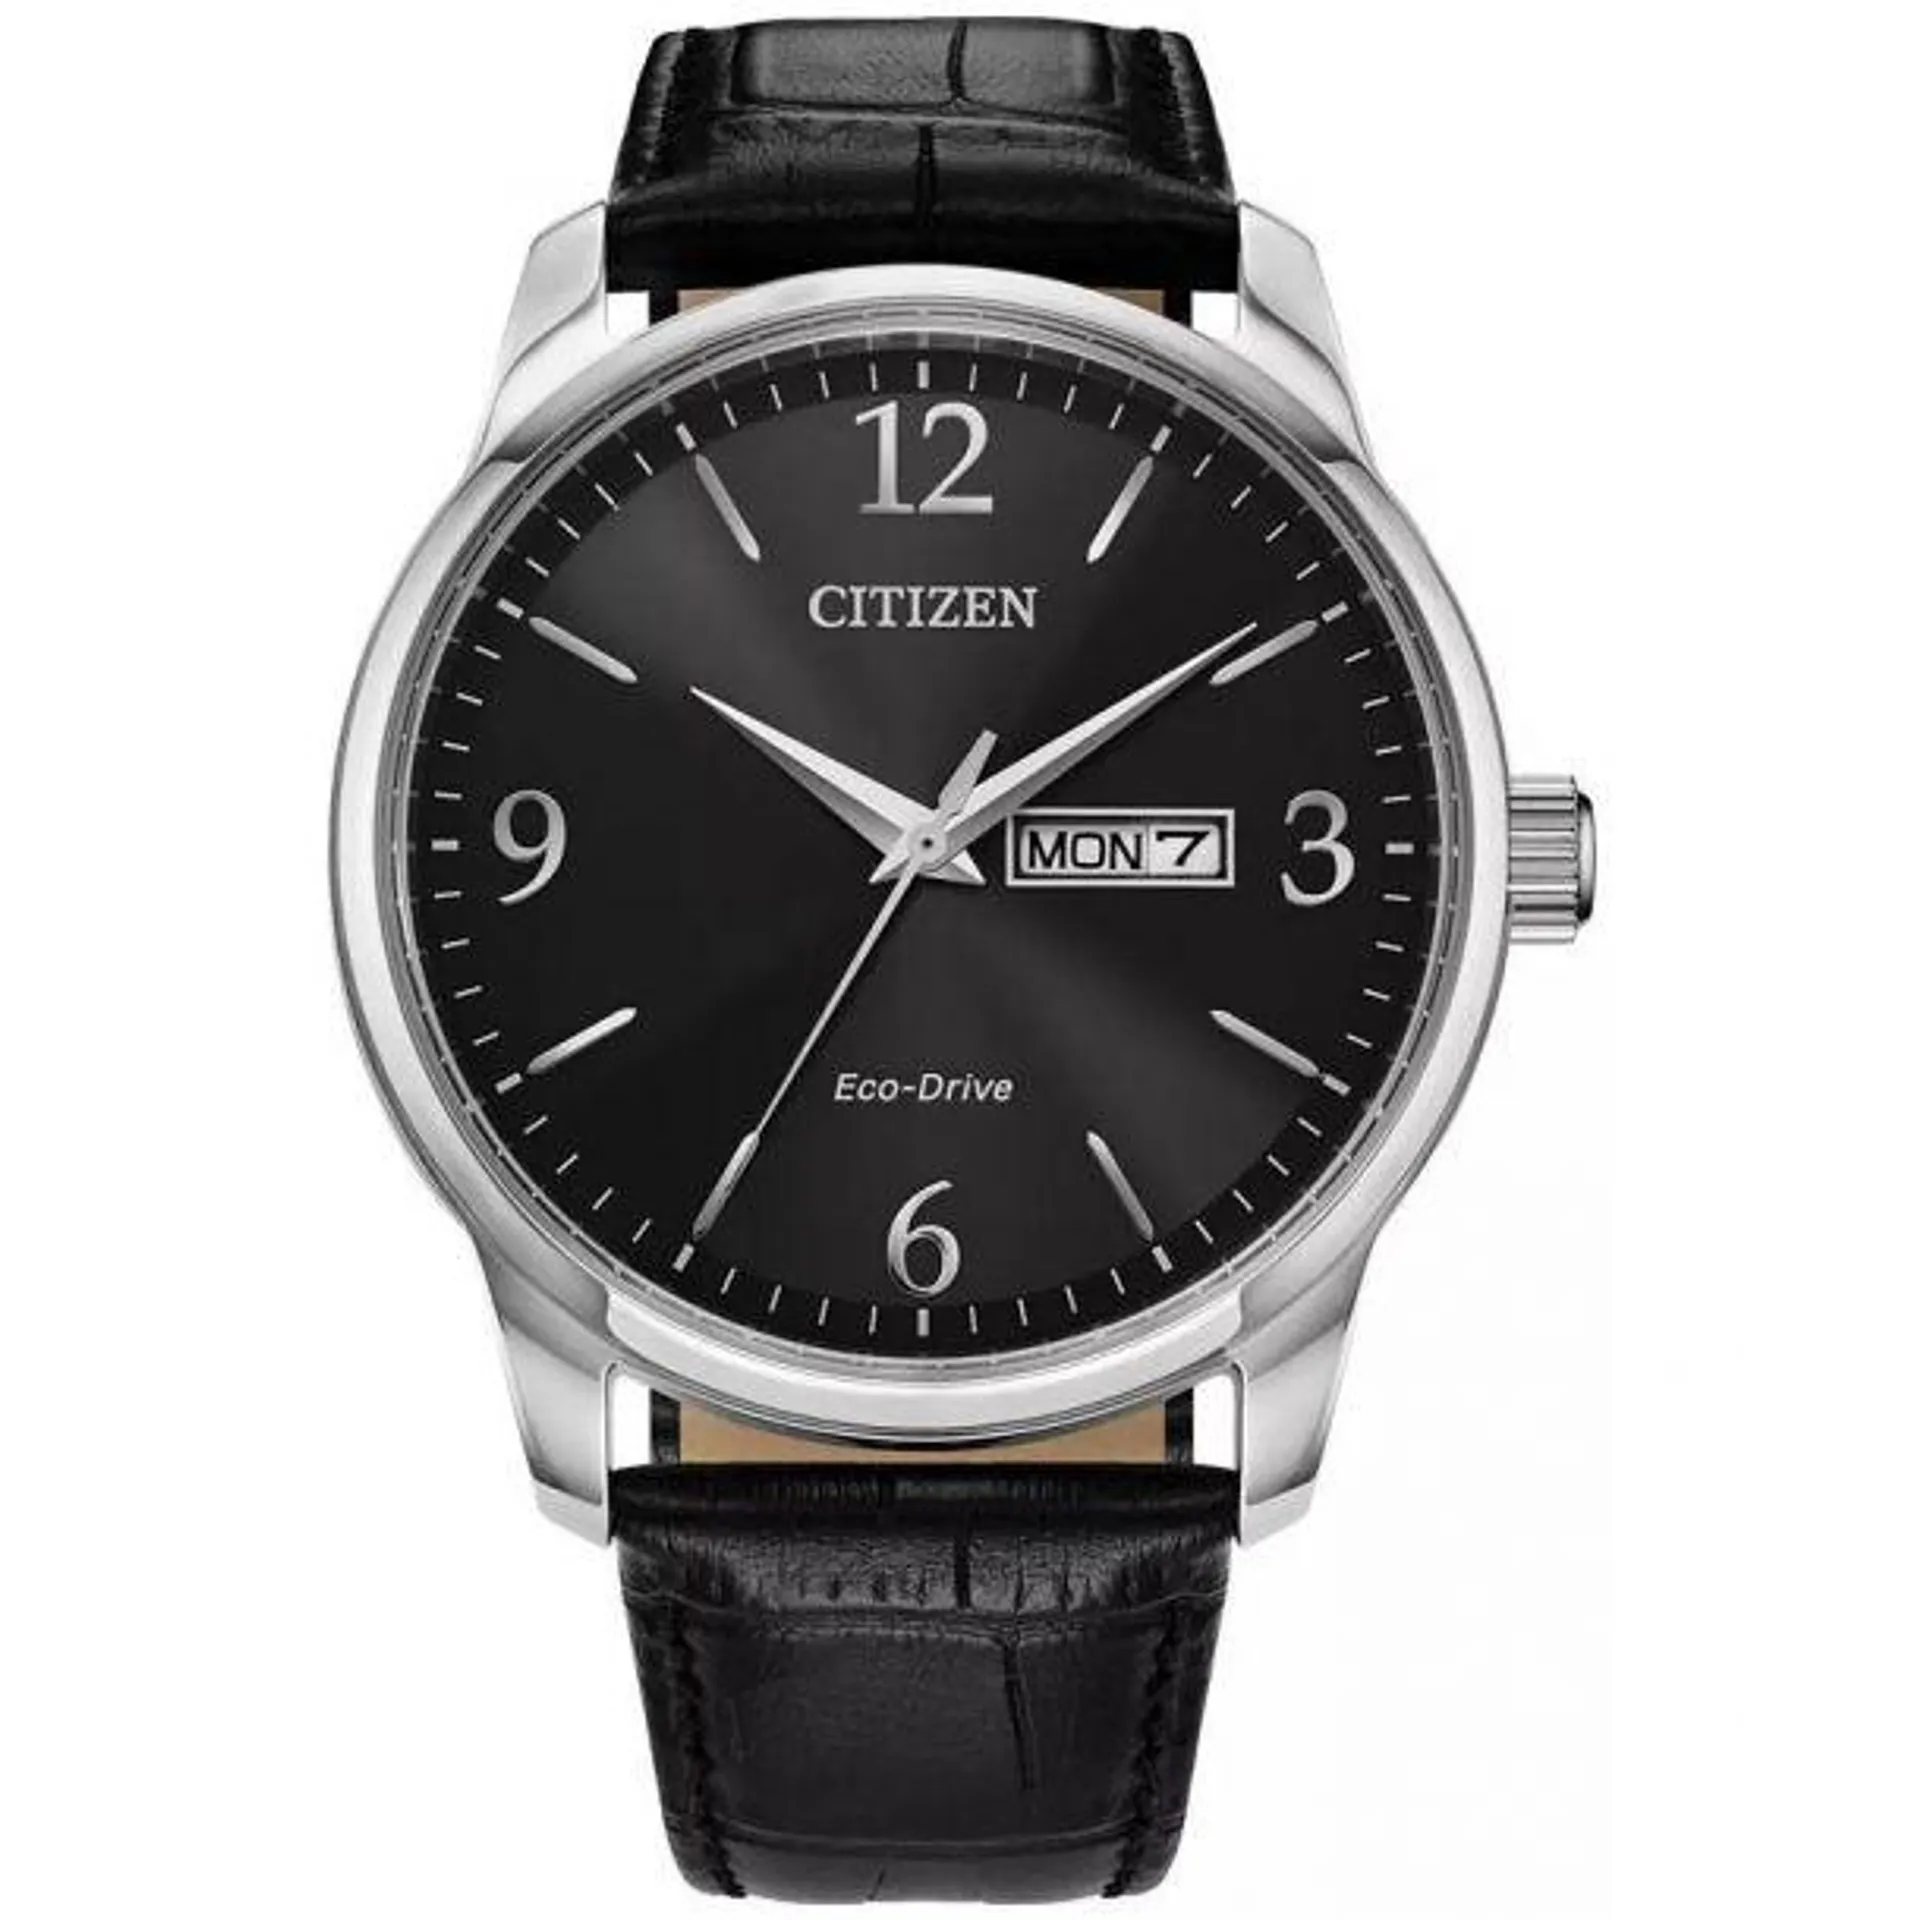 Citizen Men's 42mm Eco-Drive Leather Strap Watch - Black